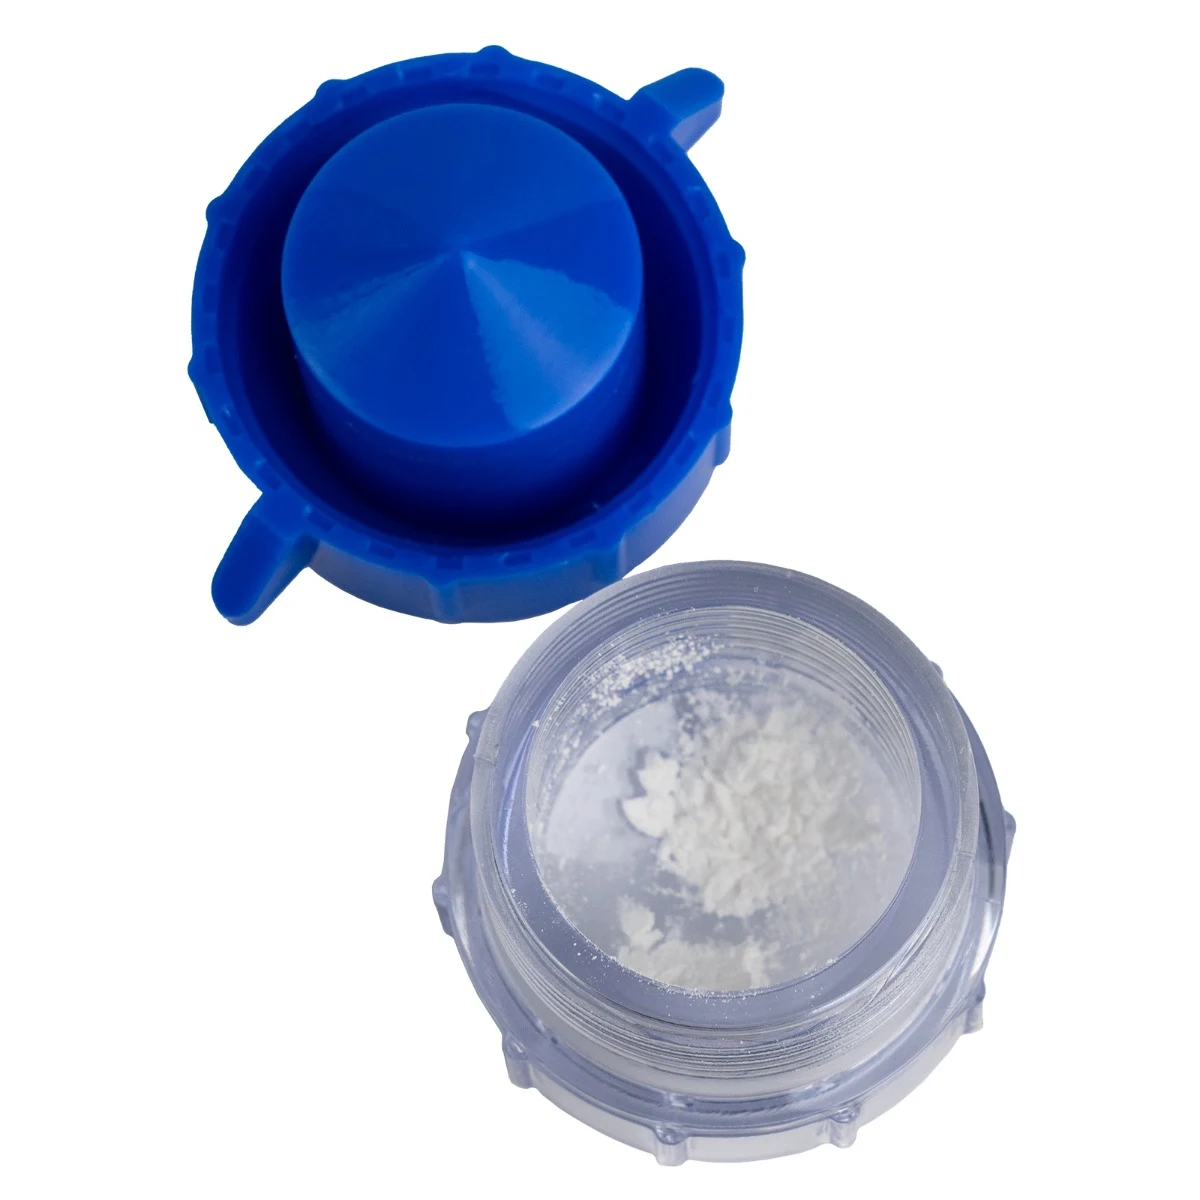 Novaplus Pill Crusher Product Image